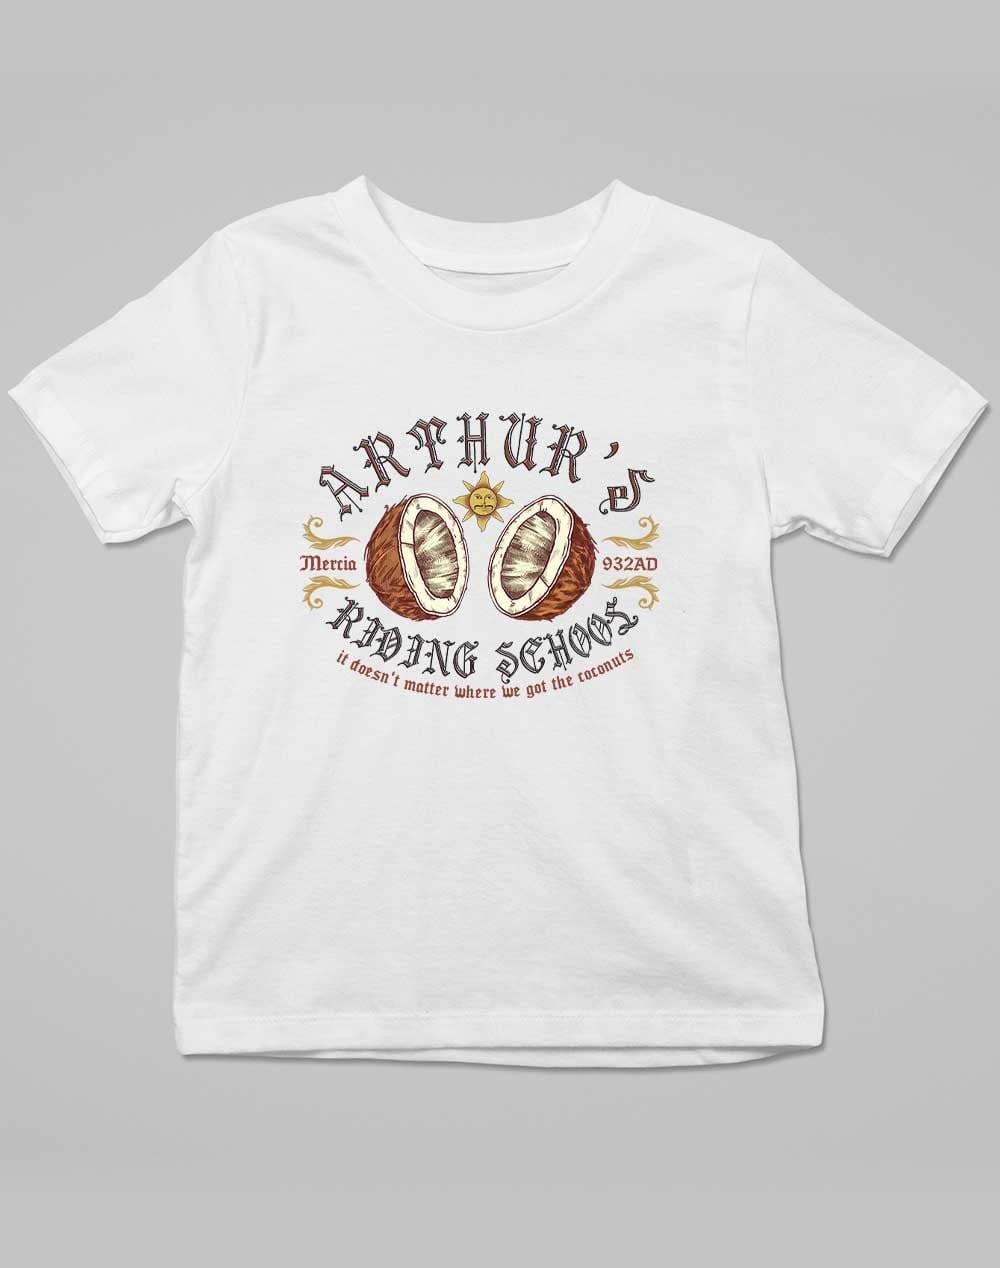 King Arthur's Riding School Kids T-Shirt 3-4 years / White  - Off World Tees